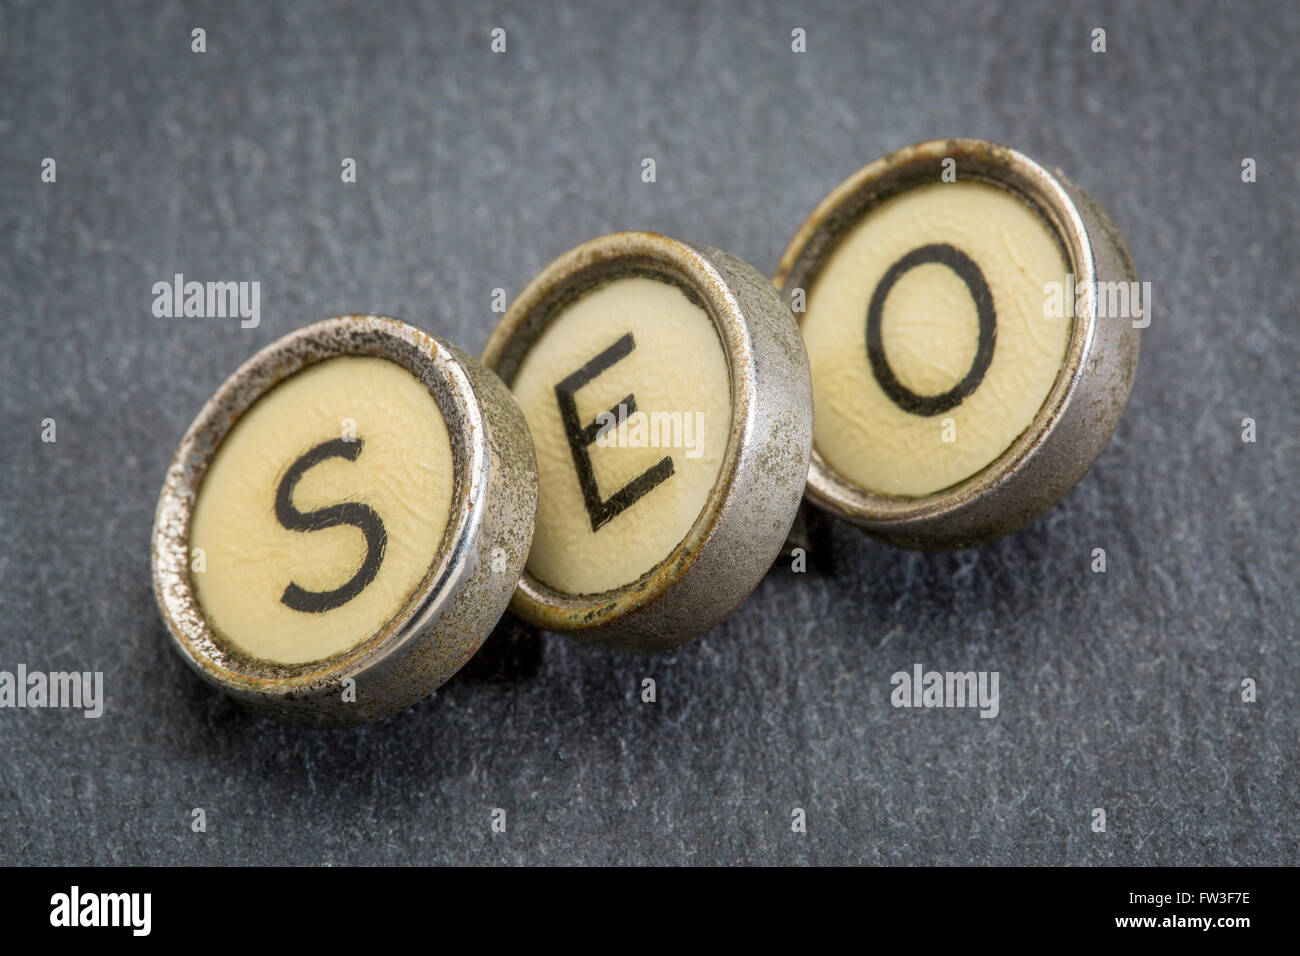 SEO acronym (search engine optimization) in old round typewriter keys against gray slate stone Stock Photo